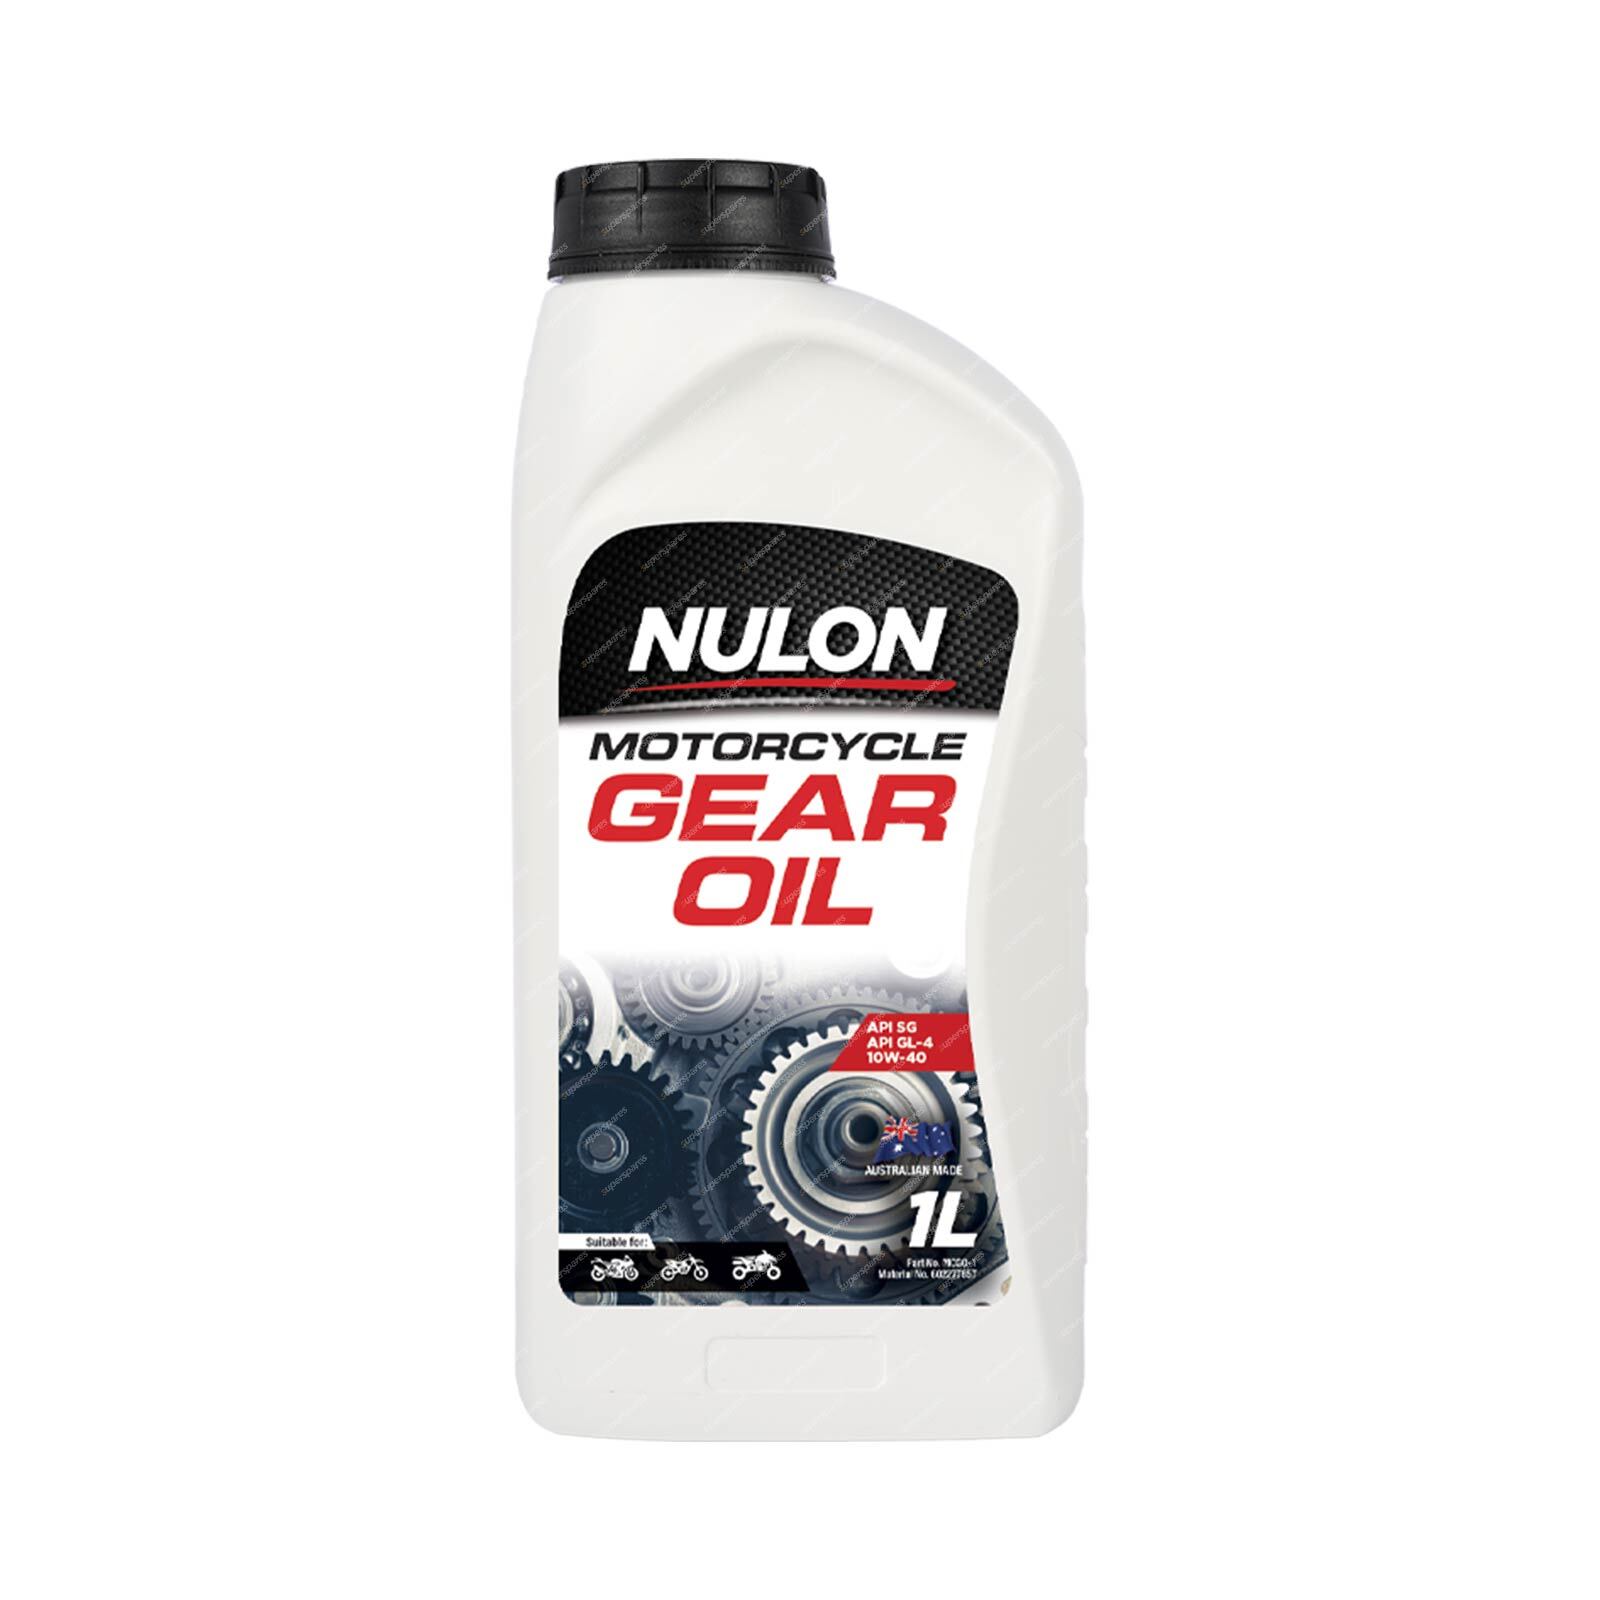 Nulon Motorcycle Gear Oil MCGO-1 Balanced Lubricant 1L API SG API GL-4 10W-40